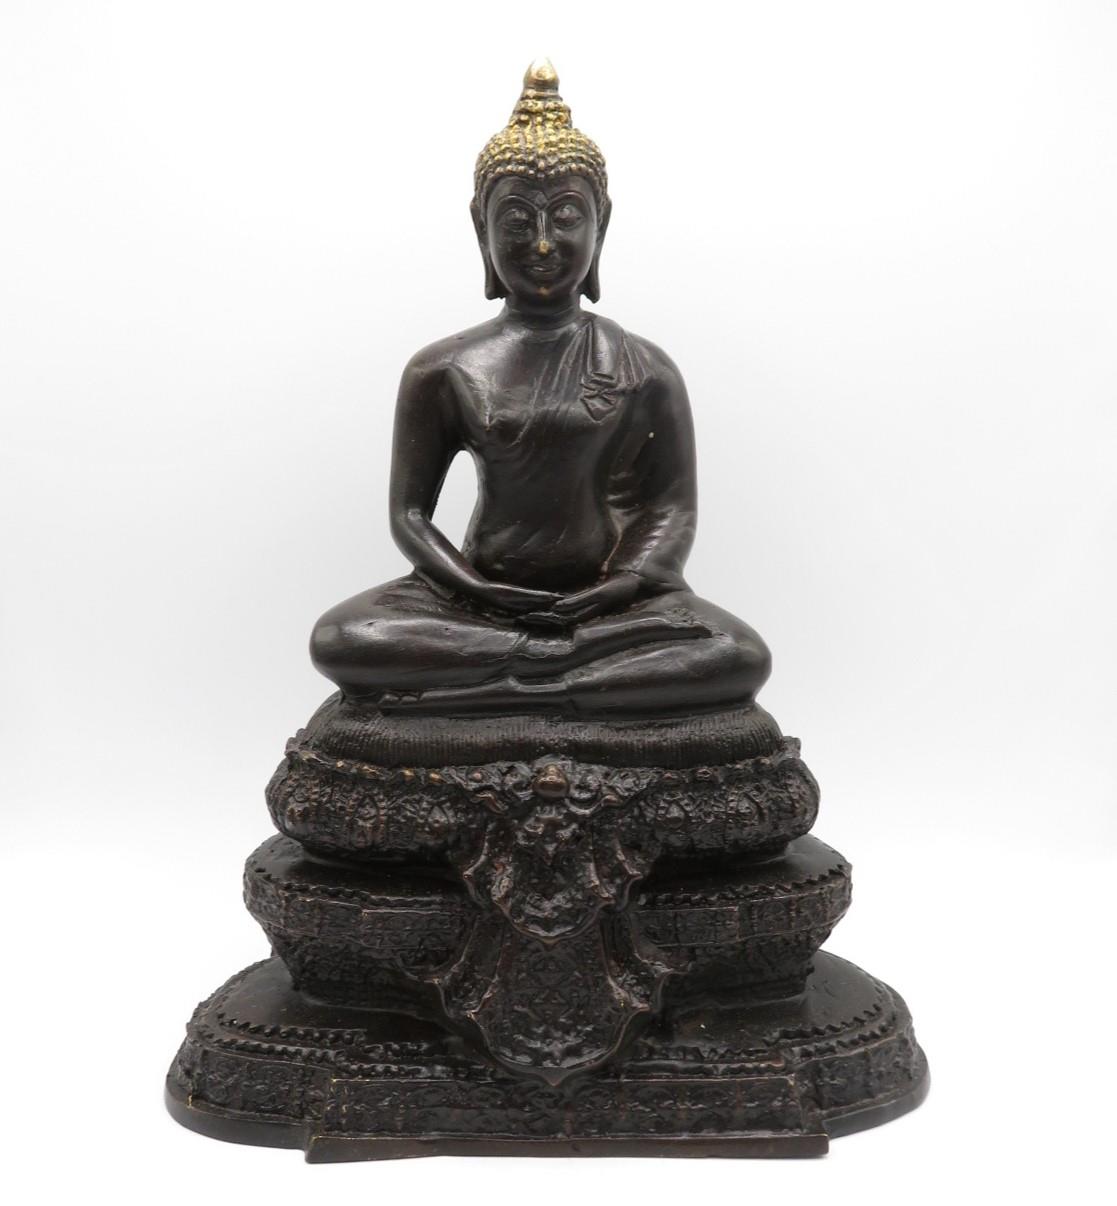 A bronze Buddha 11 inches high 3.1kg weight